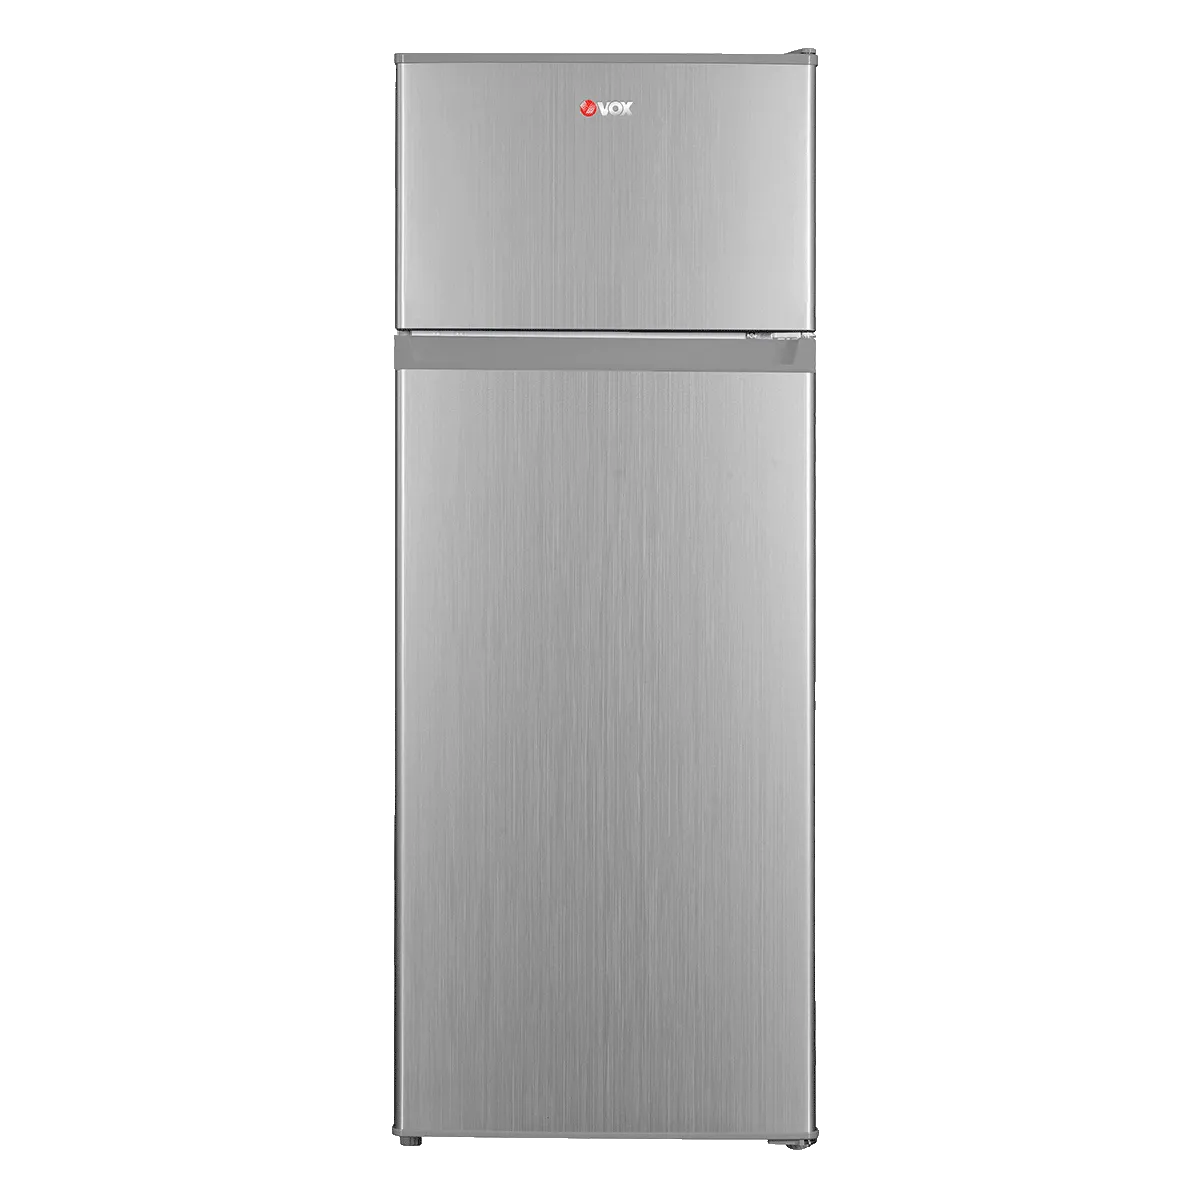 Refrigerator KG 2710 SF 